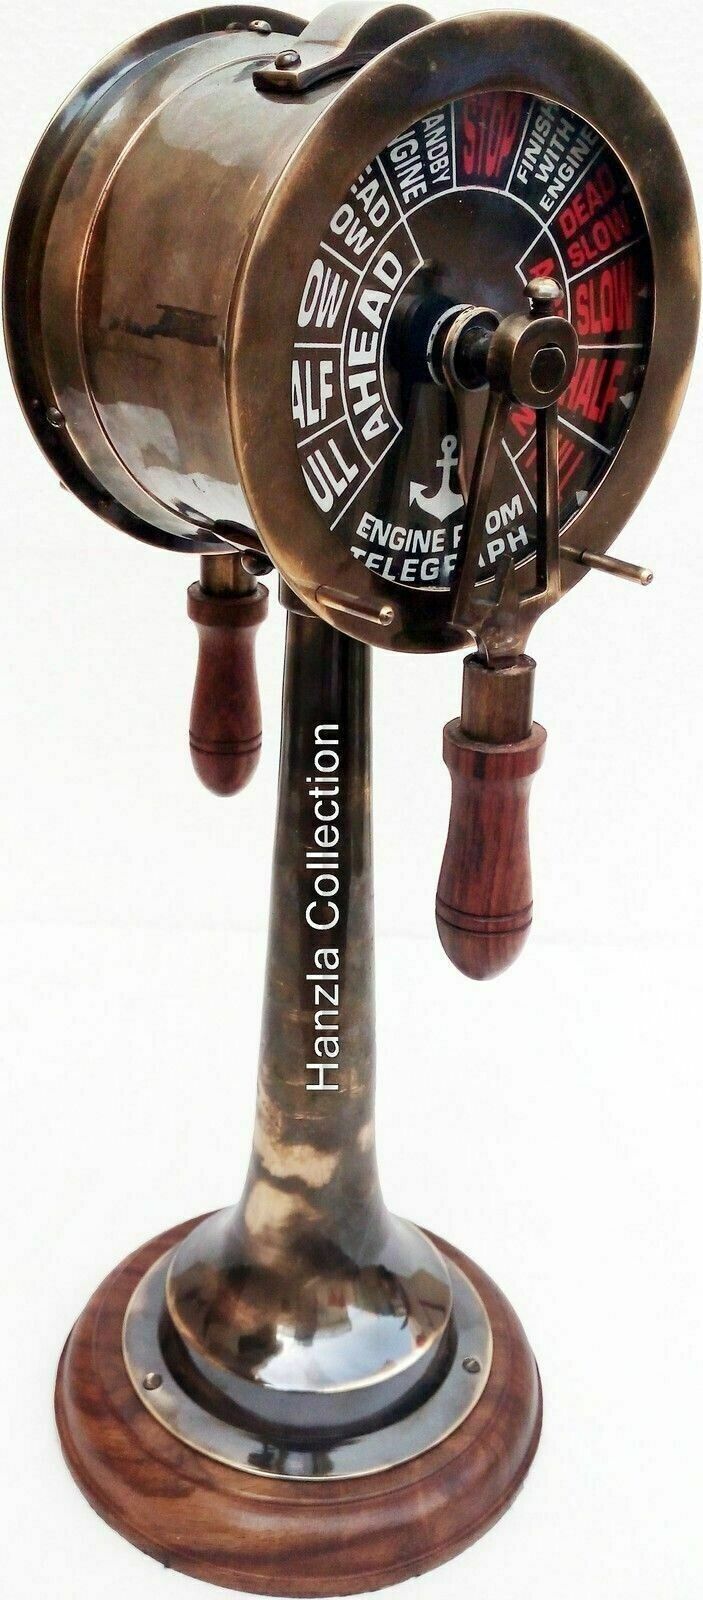 Vintage Antique Brass Telegraph Ship Marine Engine Room Telegraph Decorative